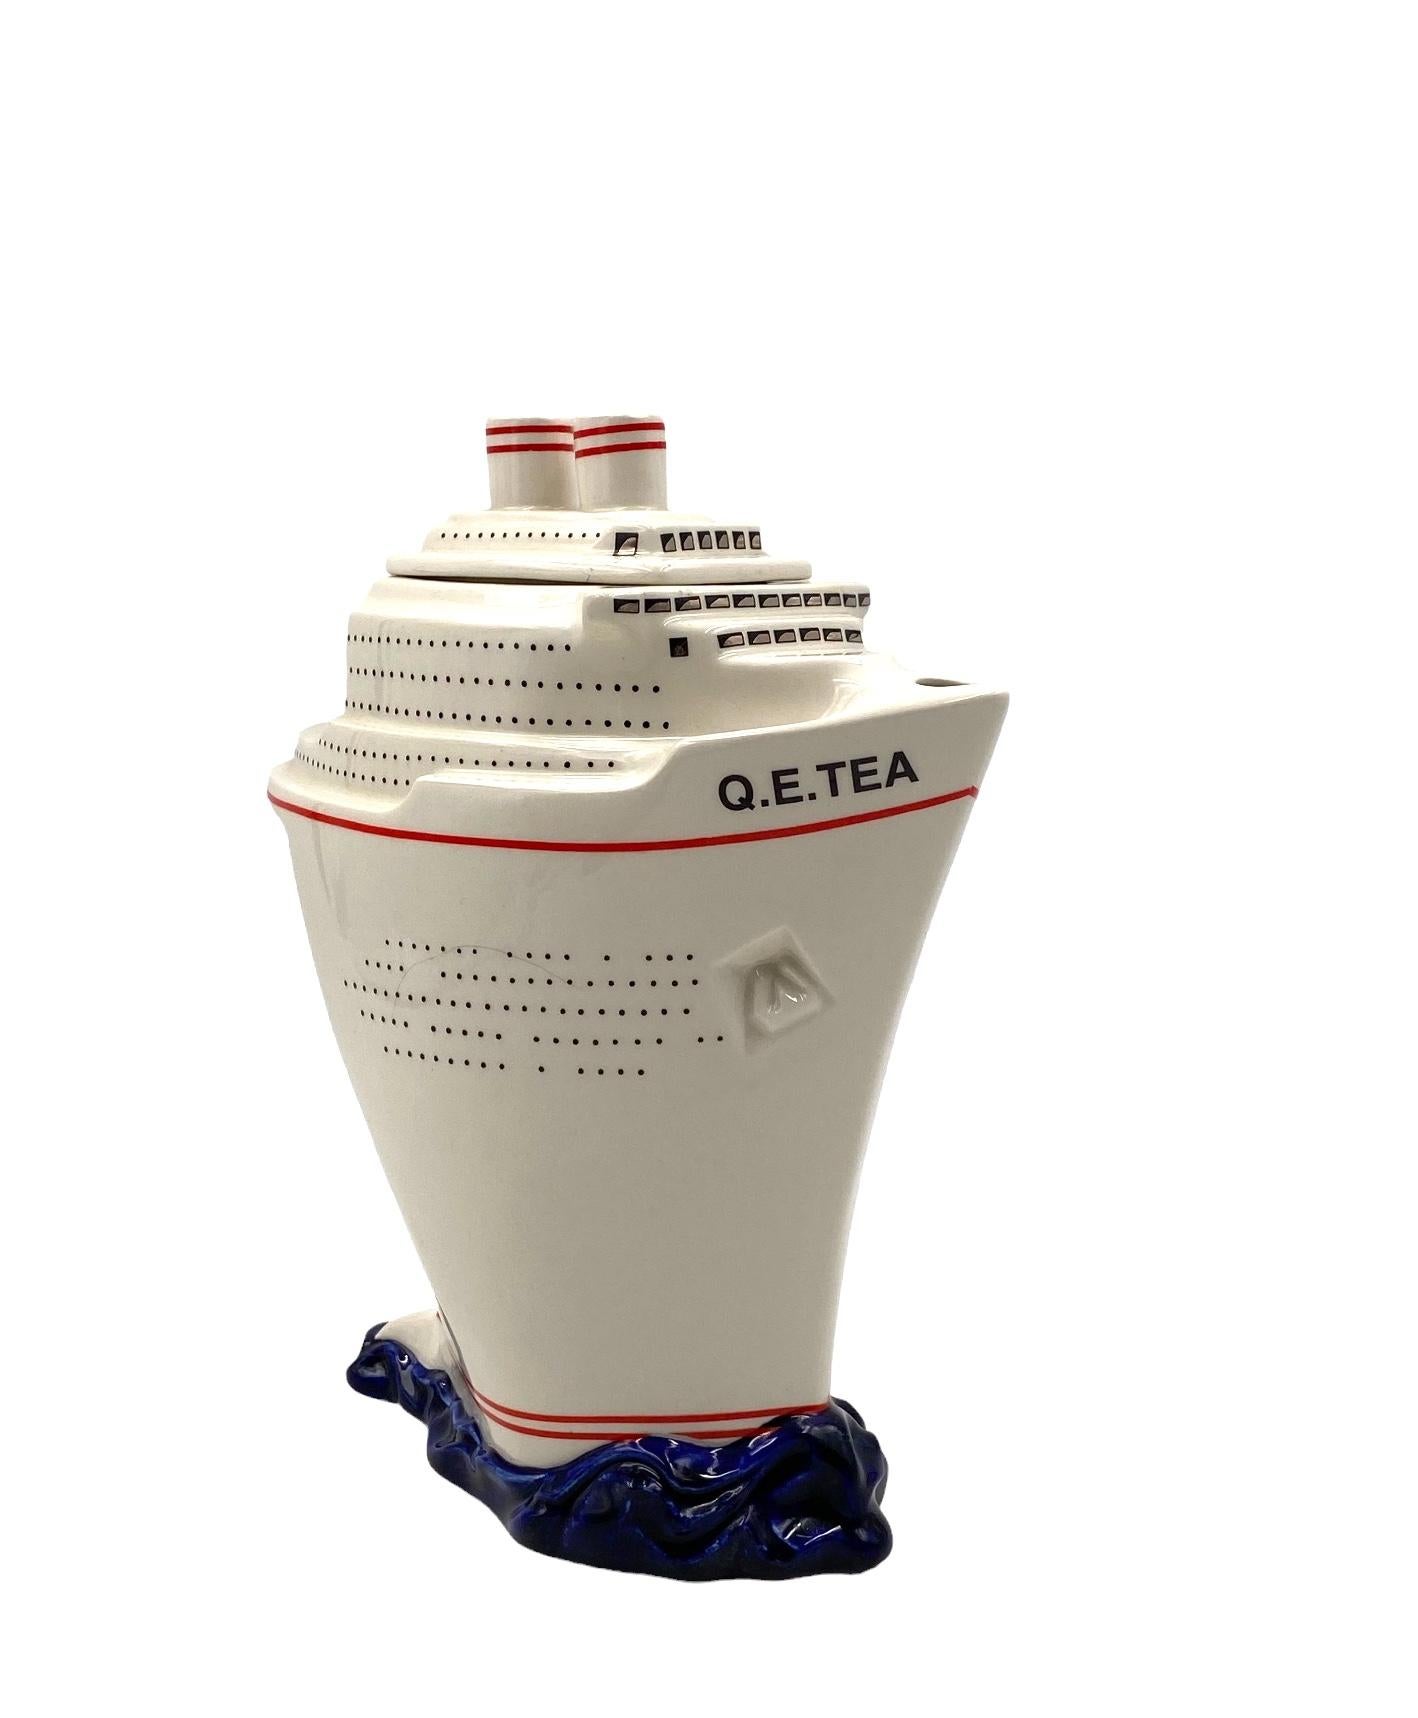 Queen Elizabeth II Cruise Ship Teapot, Paul Cardew, UK, 2000s For Sale 8